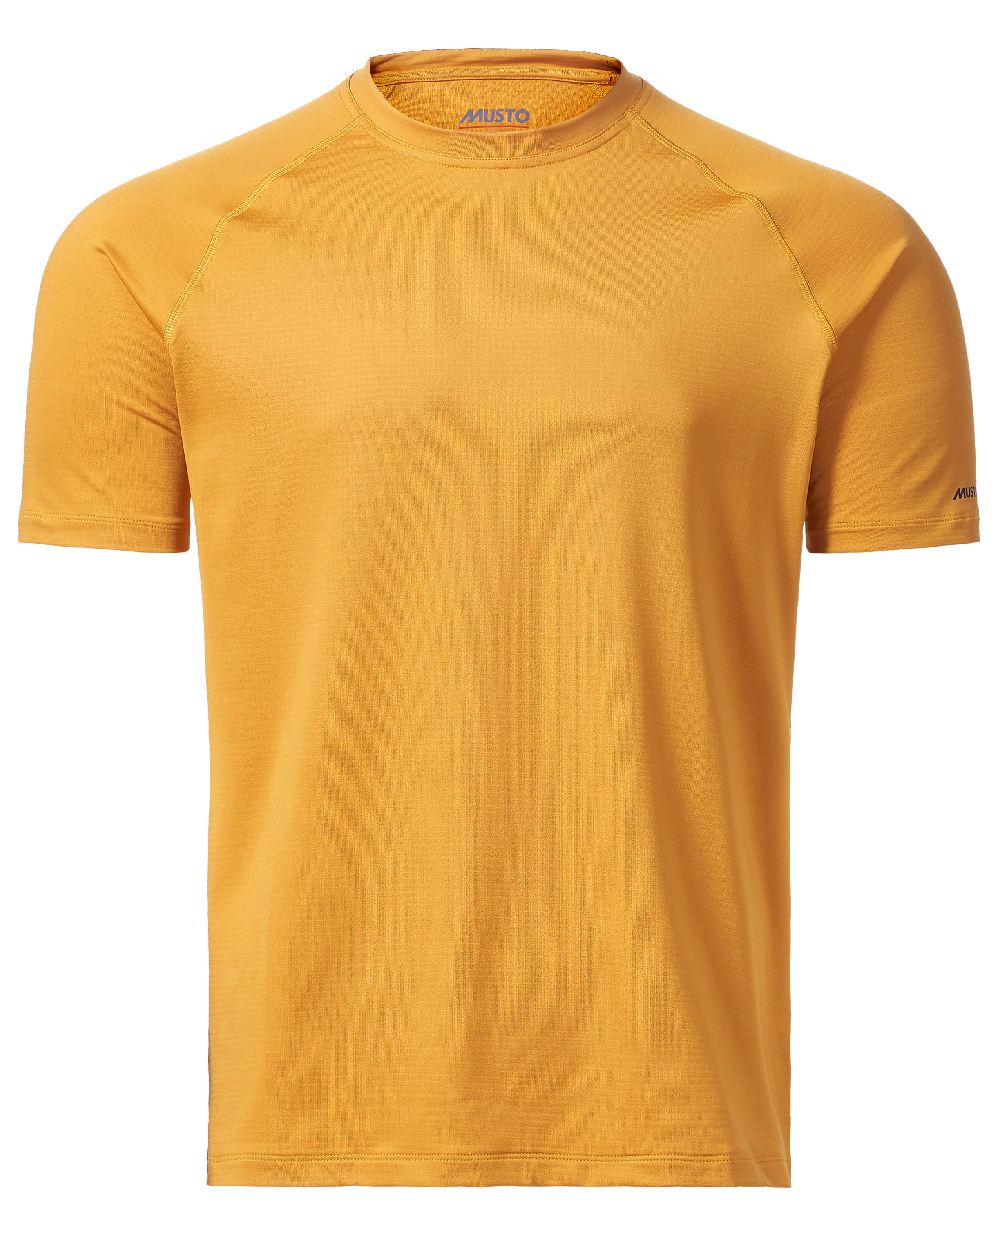 Inca Gold coloured Musto Mens Sunblock Short Sleeve T-Shirt on White background 